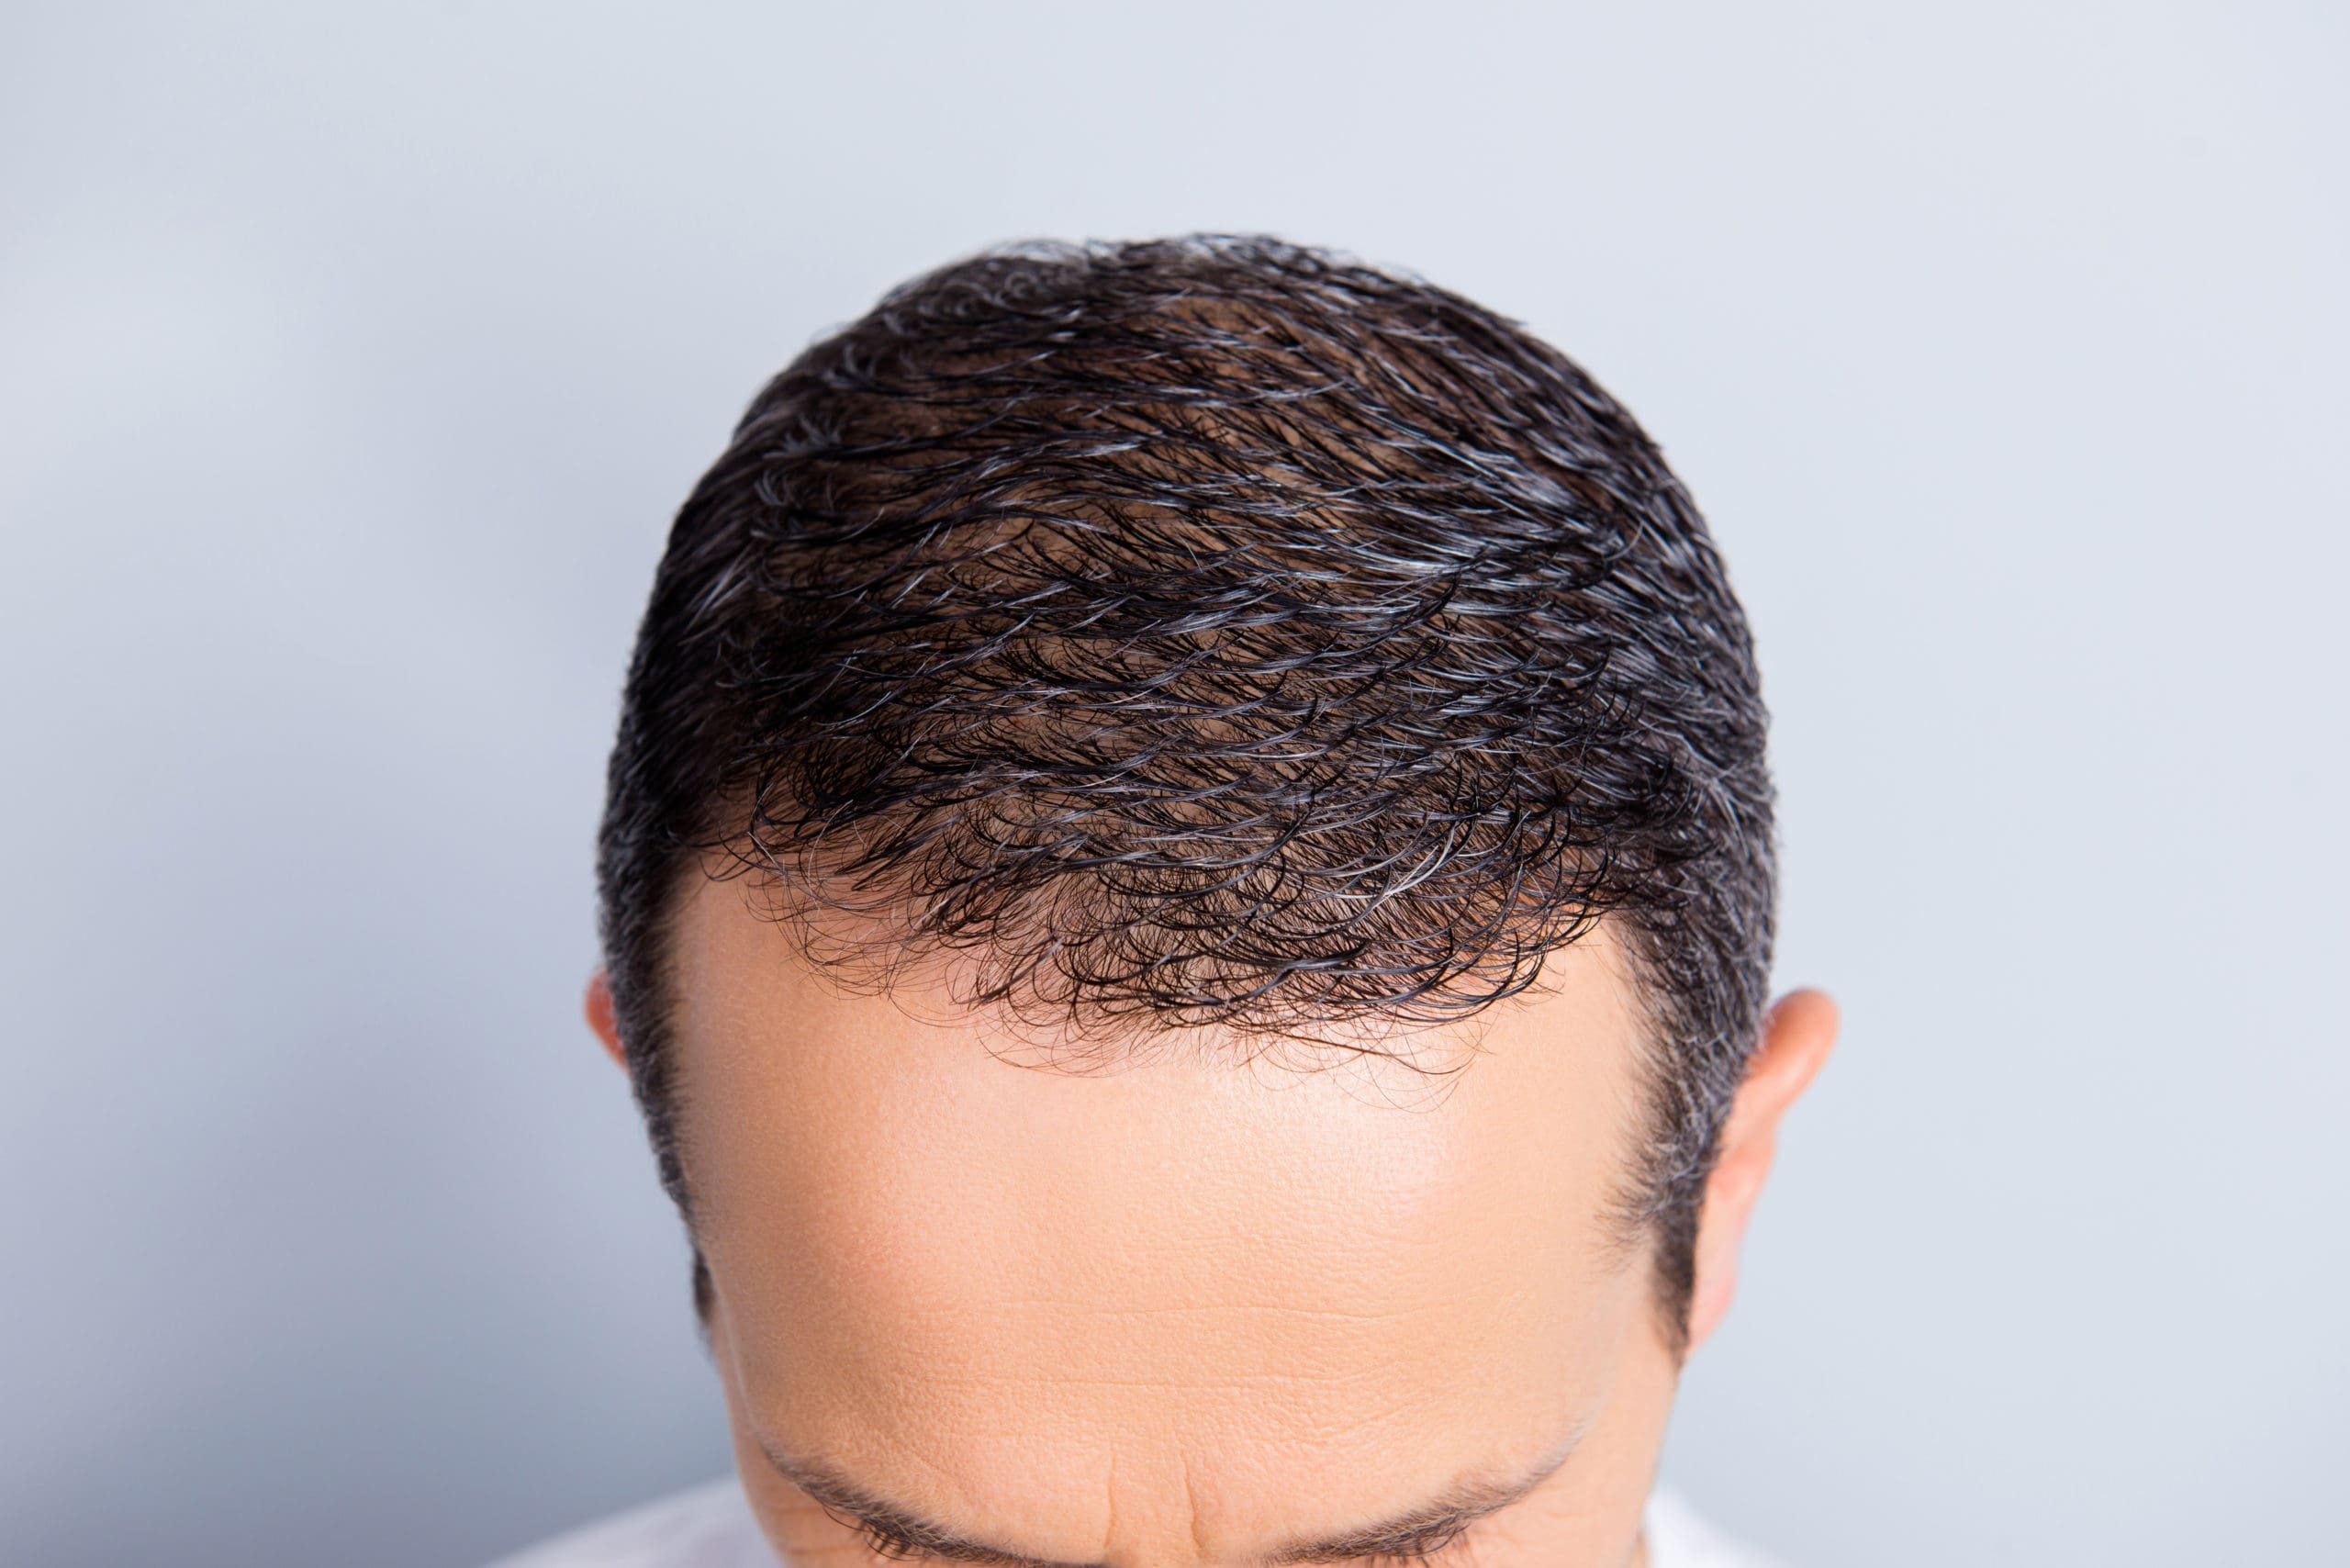 Keravive scalp treatments